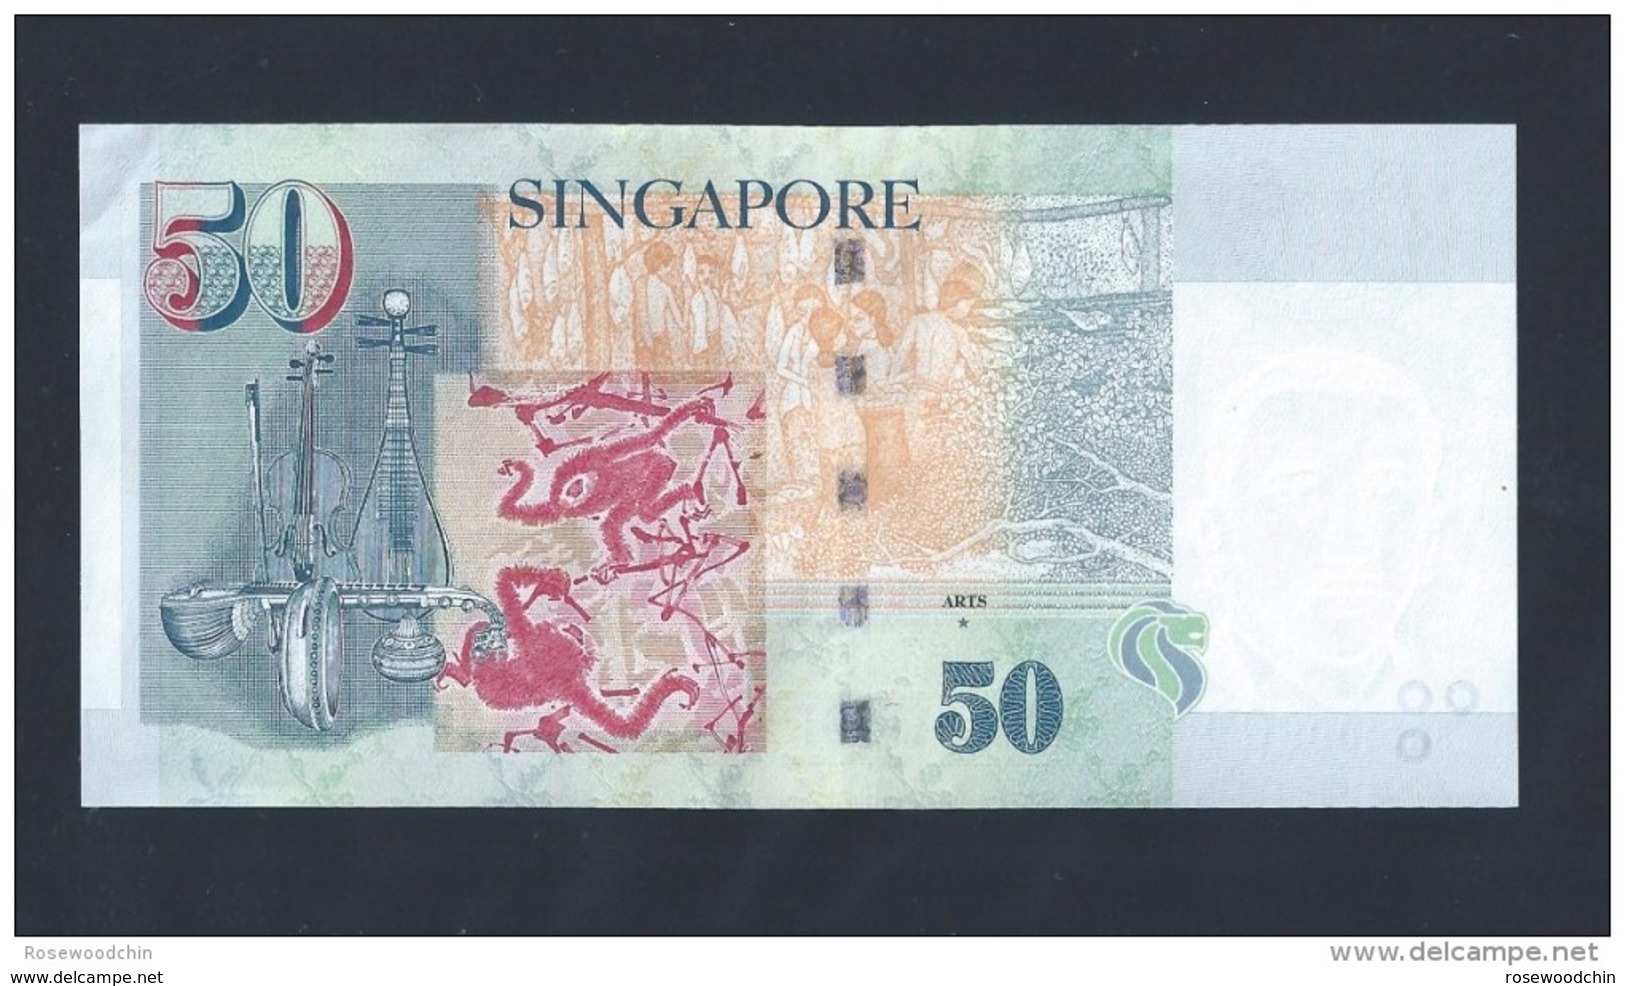 Singapore $50 Dollars Portrait Series Lucky Number Banknote 5DG909900 (#90) AU - Singapur